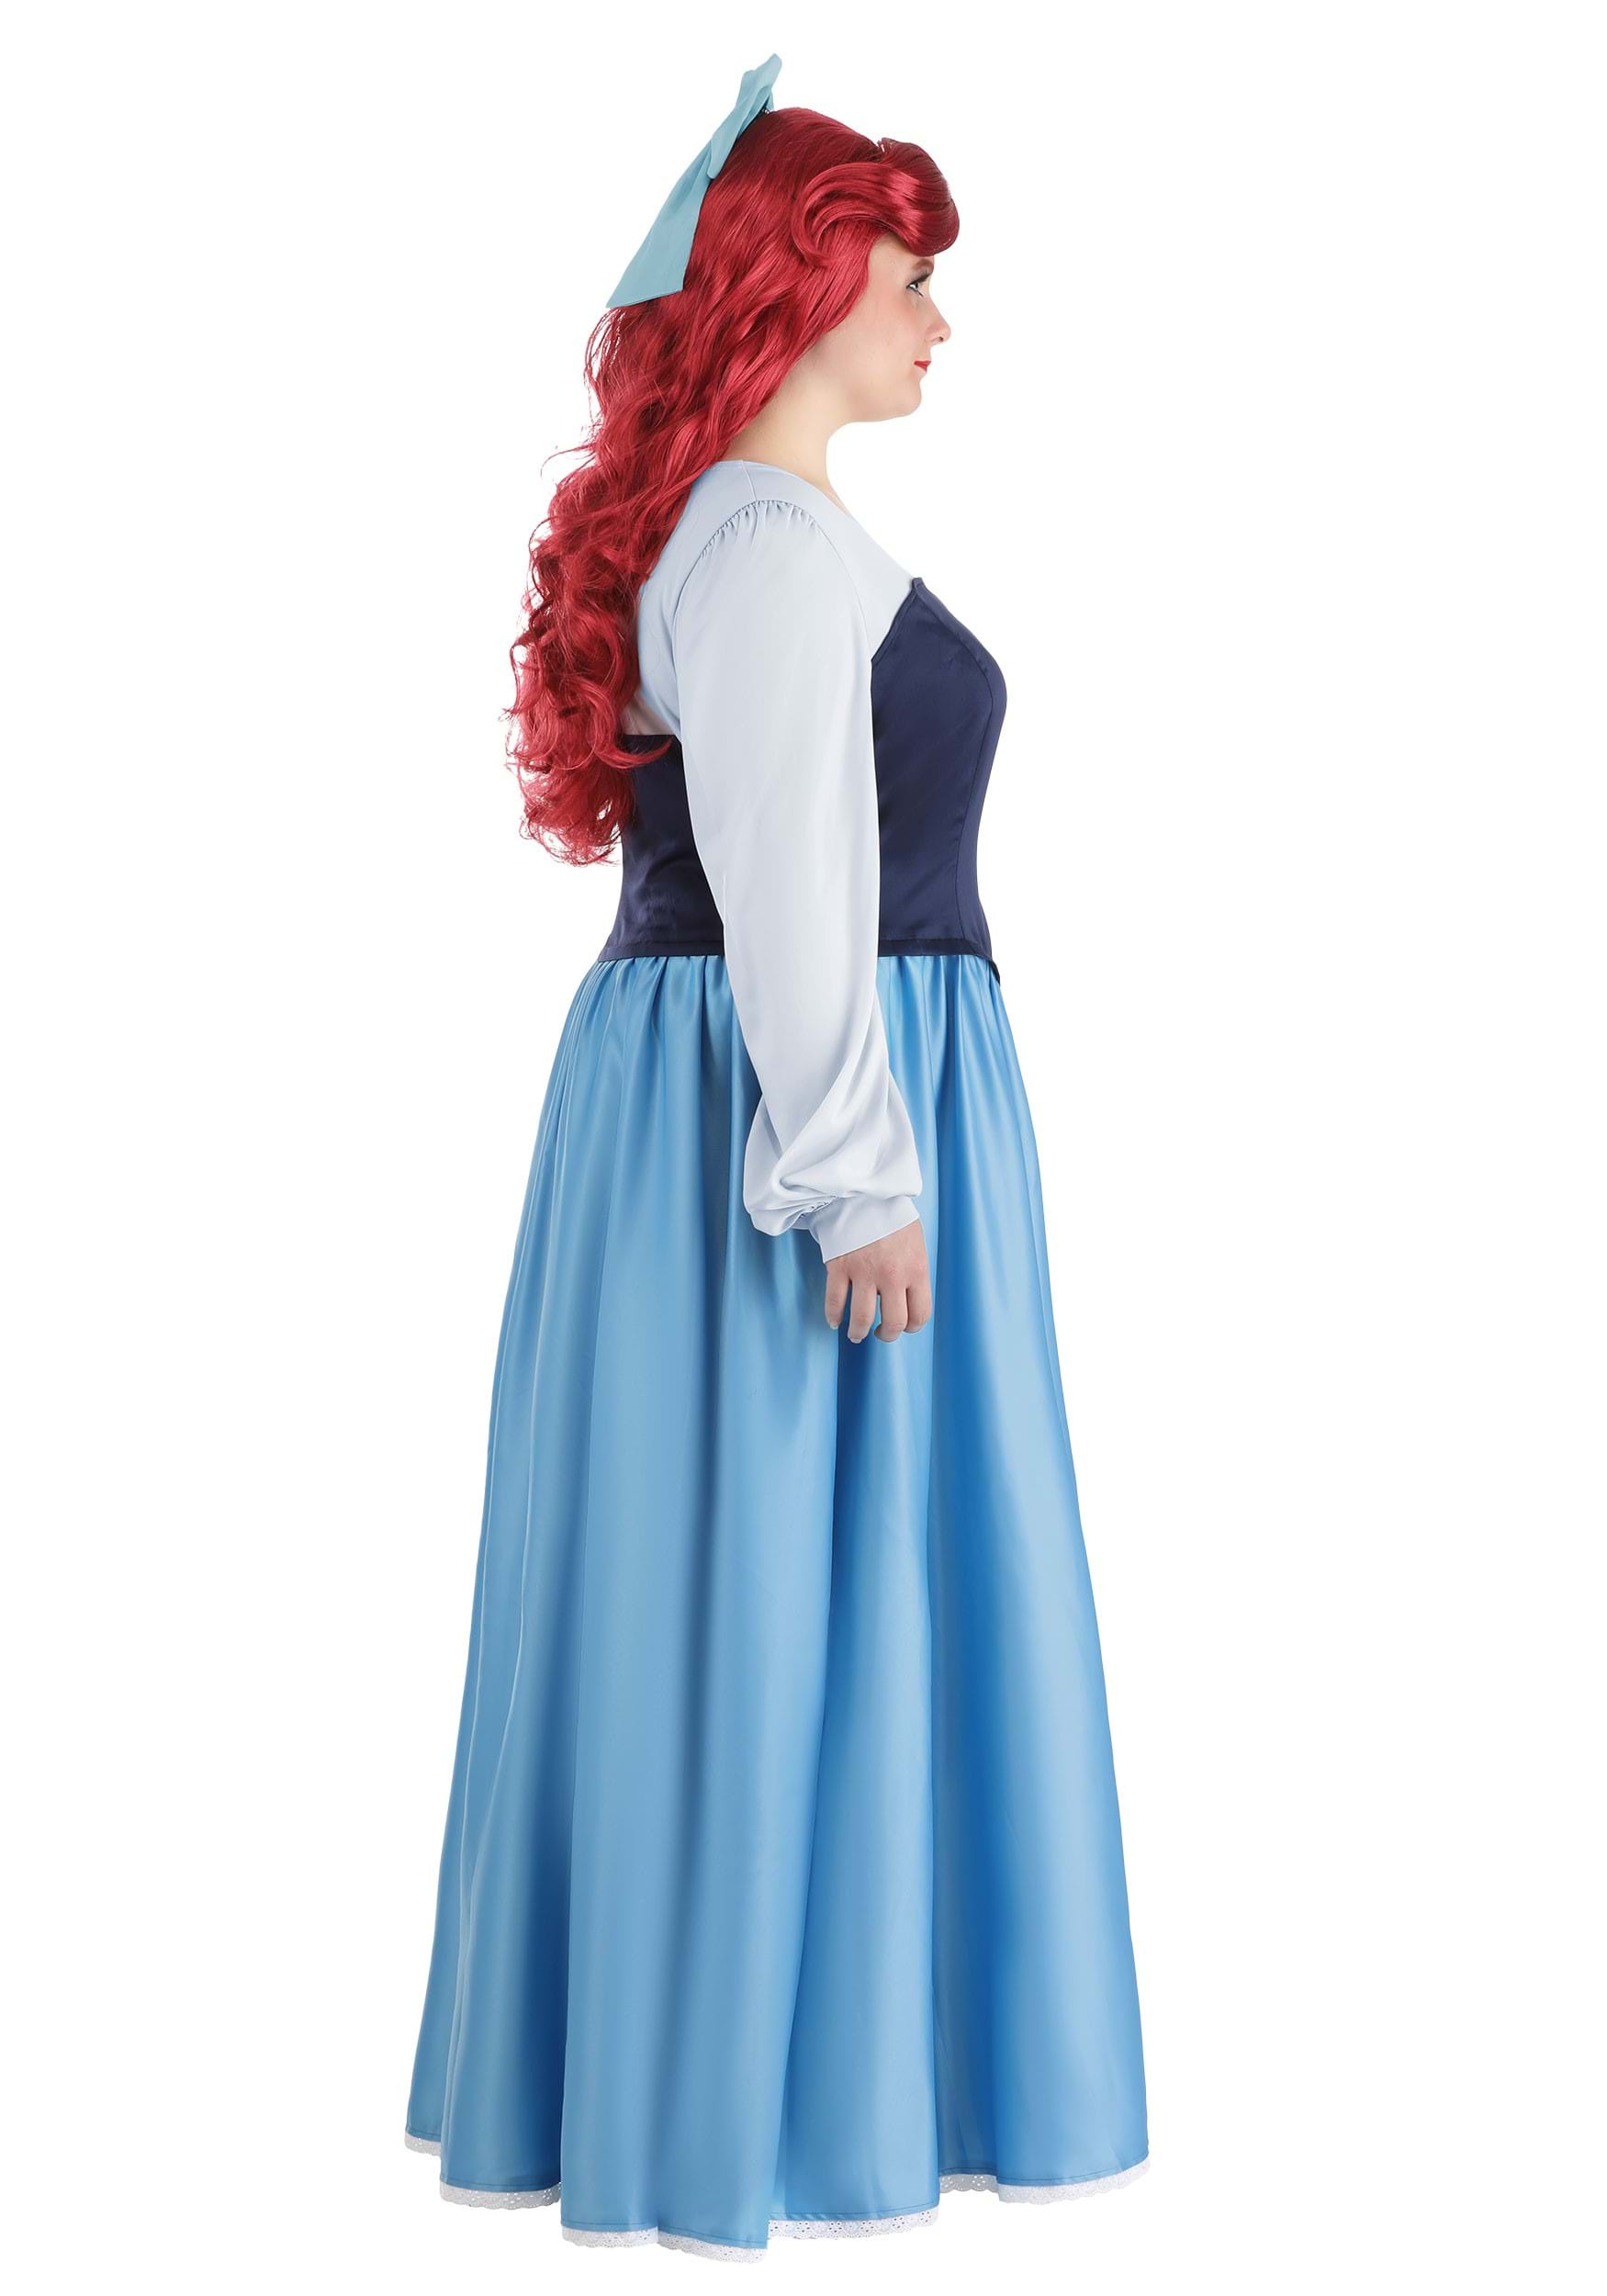 The Little Mermaid Plus Size Women's Ariel Blue Dress Costume lupon